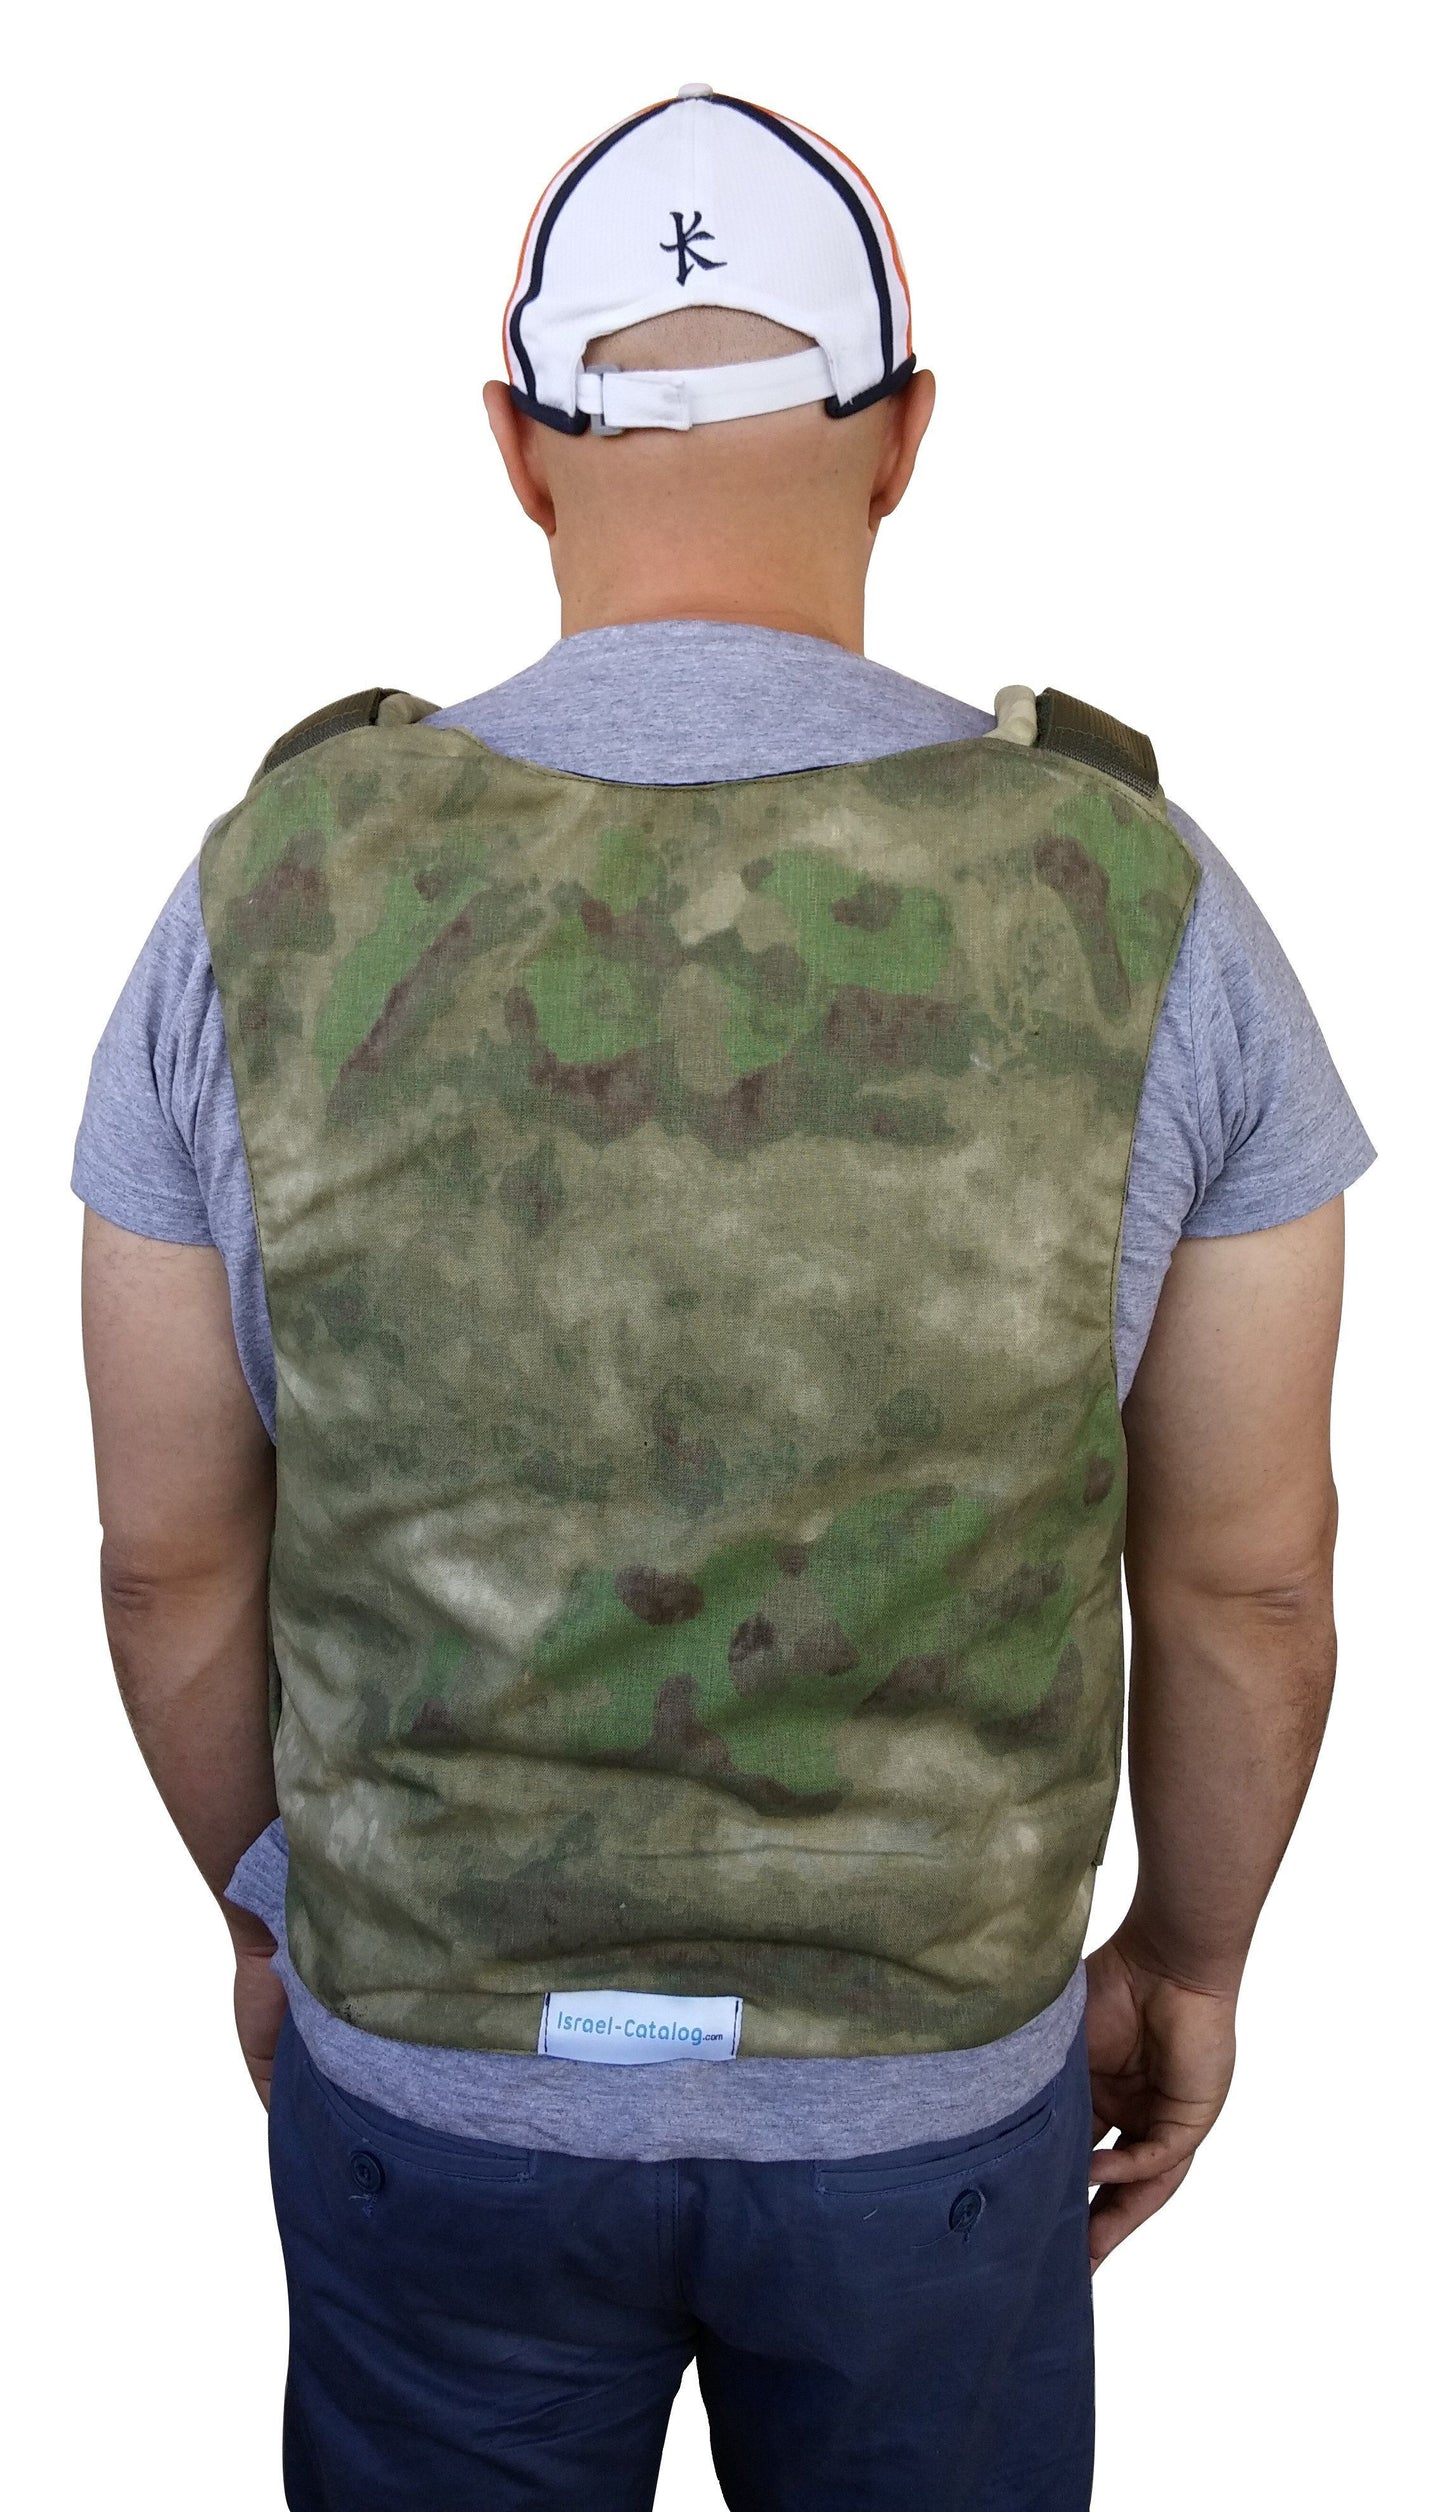 Israel Catalog Bulletproof Vest Super Light Super Thin Level III-A